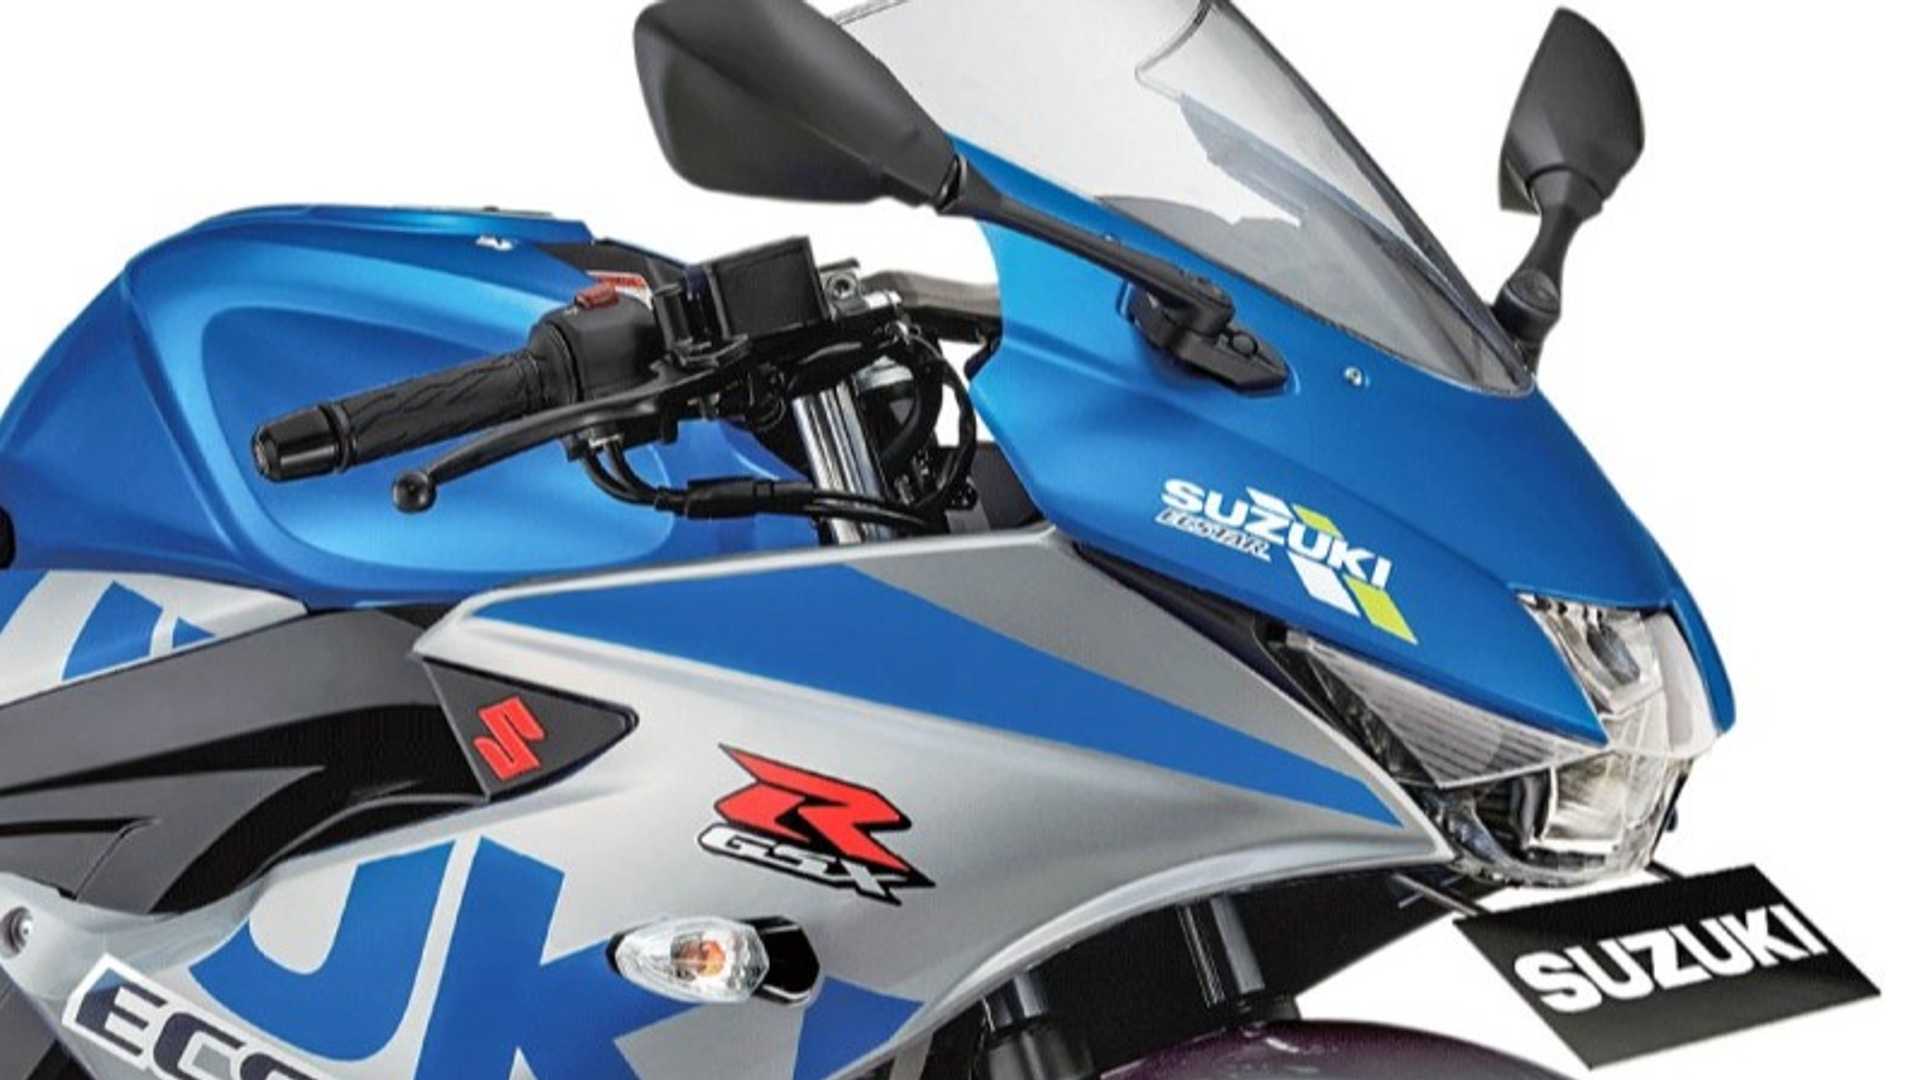 Suzuki GSX R150 MotoGP Edition Launched In Indonesia